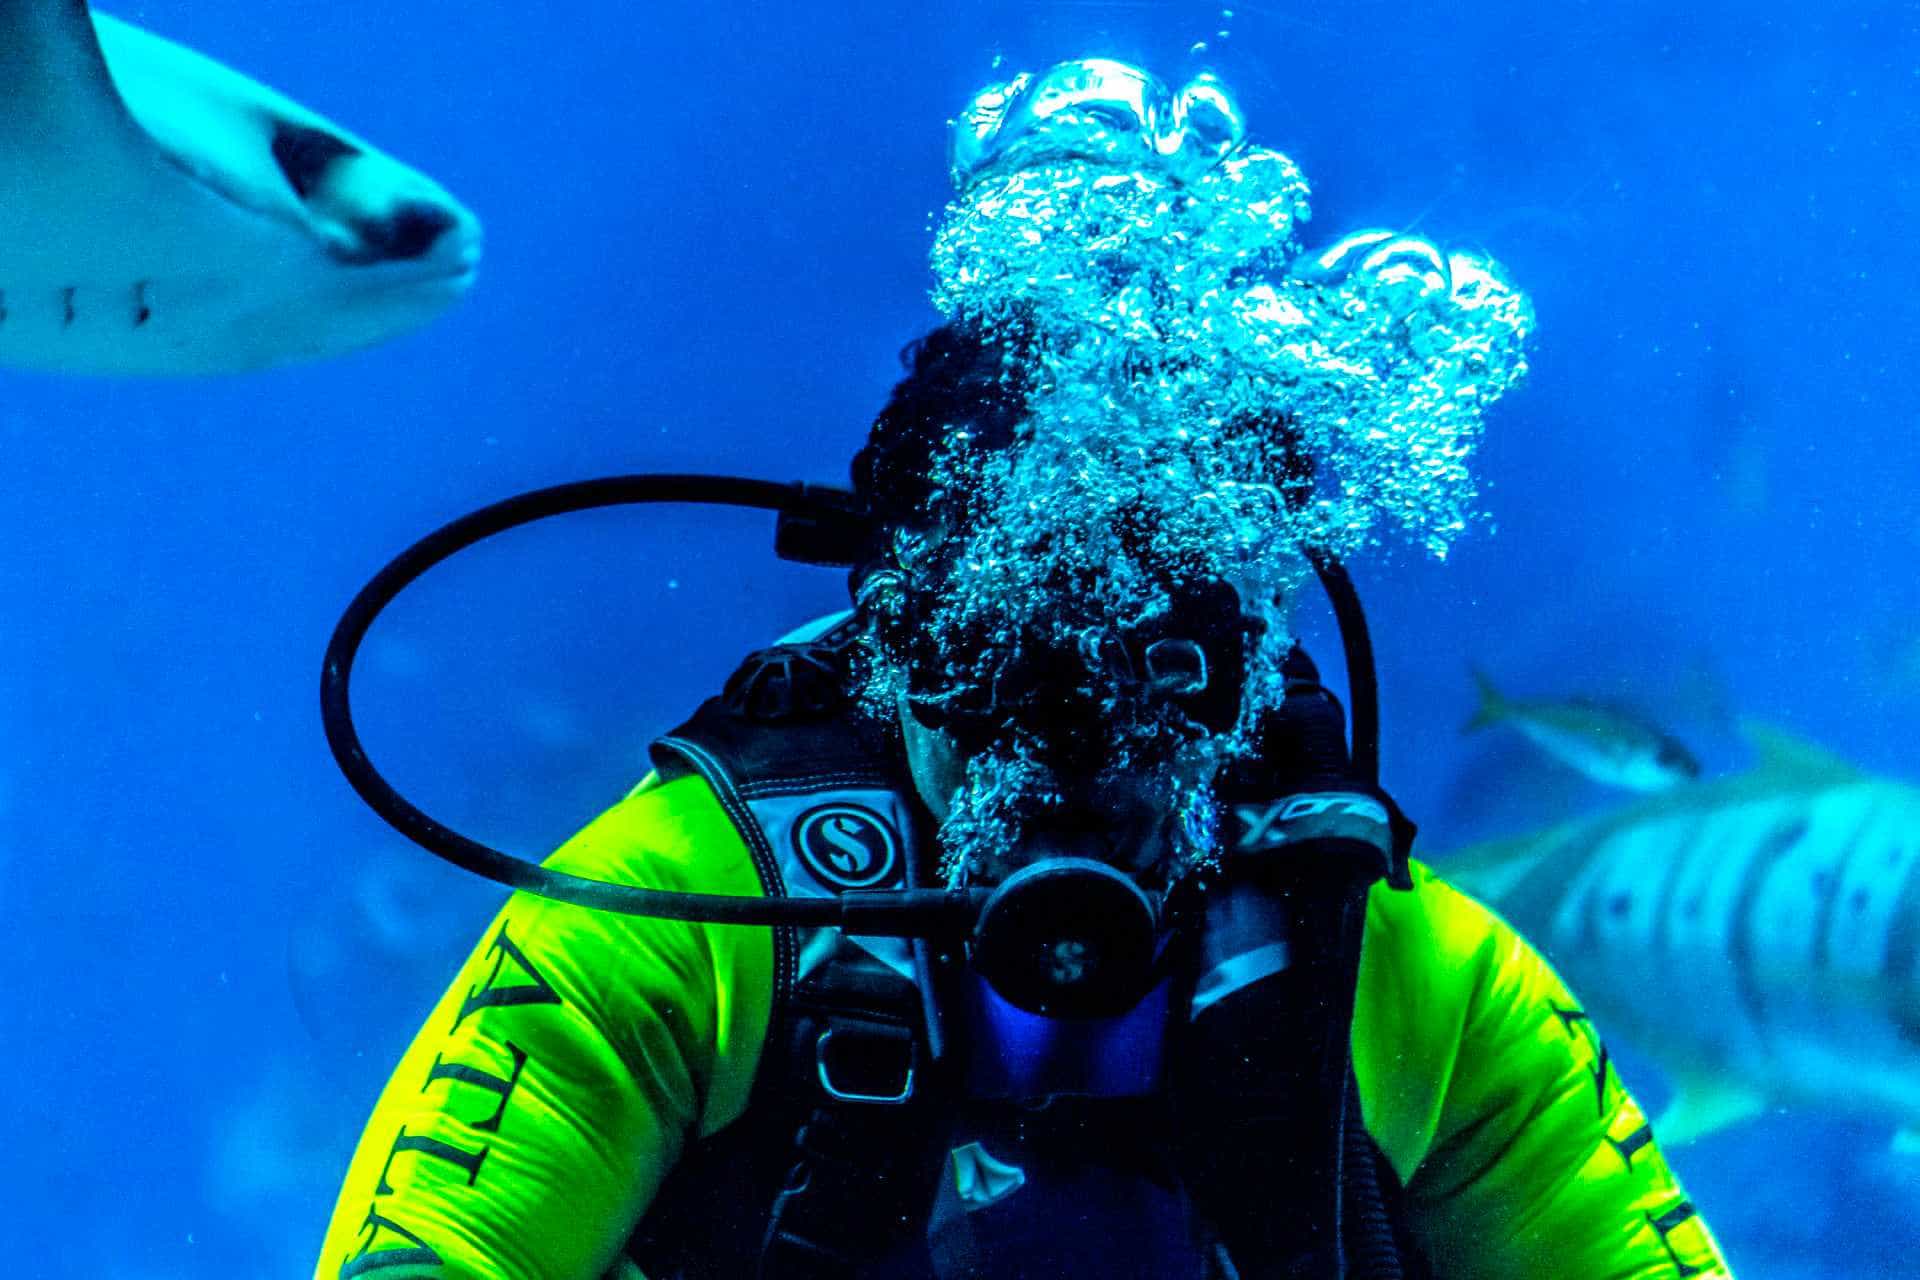 Scuba diver breathing through regulator underwater